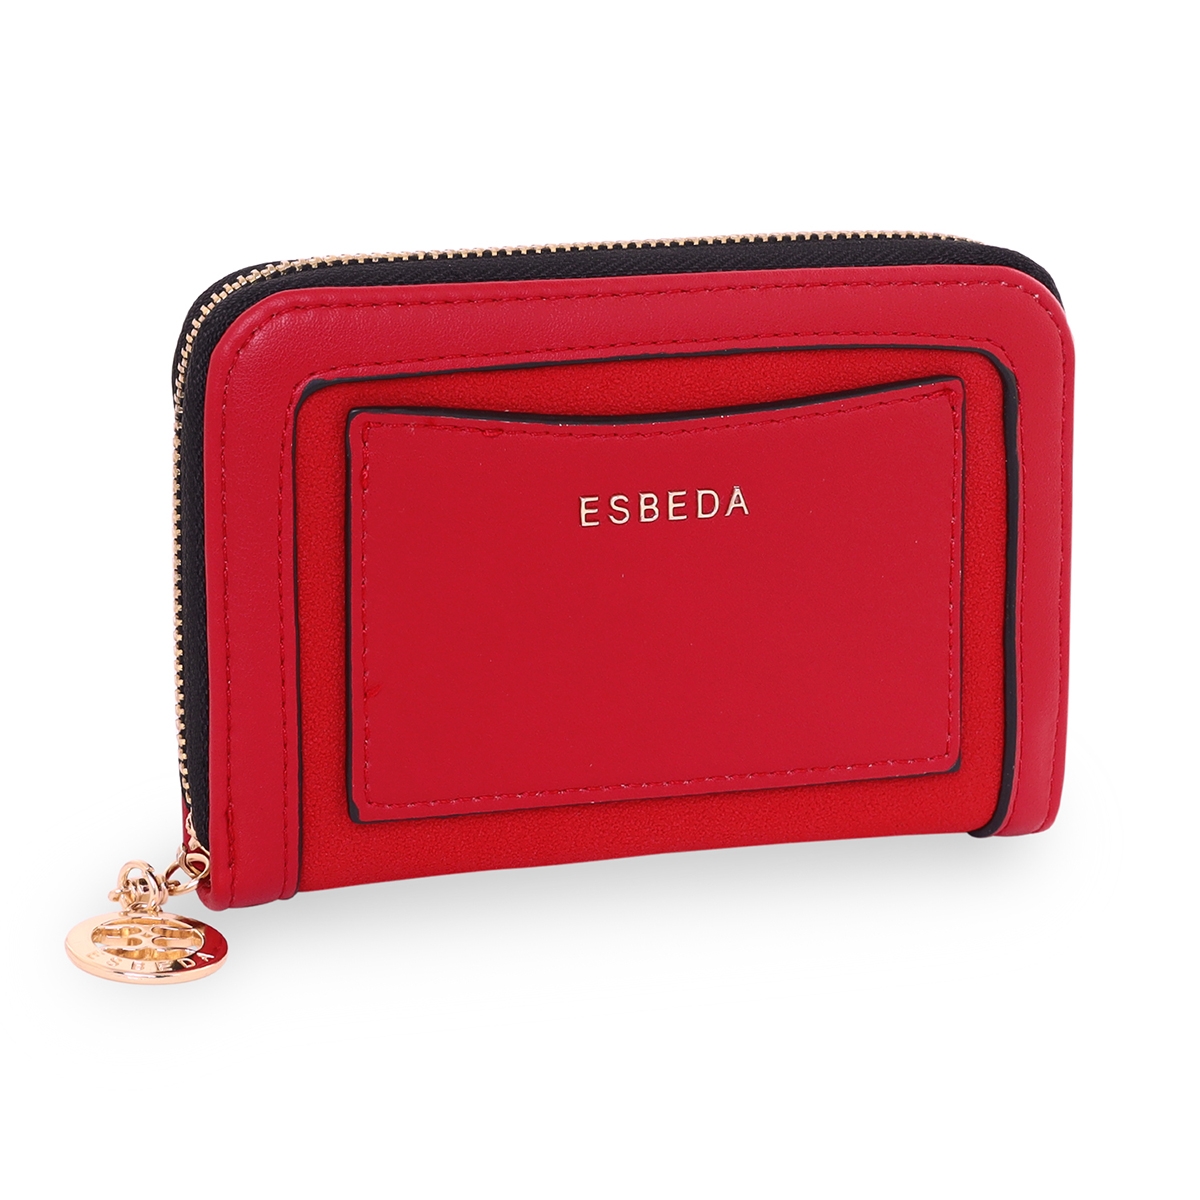 ESBEDA | ESBEDA Red Color Soft Suede Wallet For Women's- Small 7